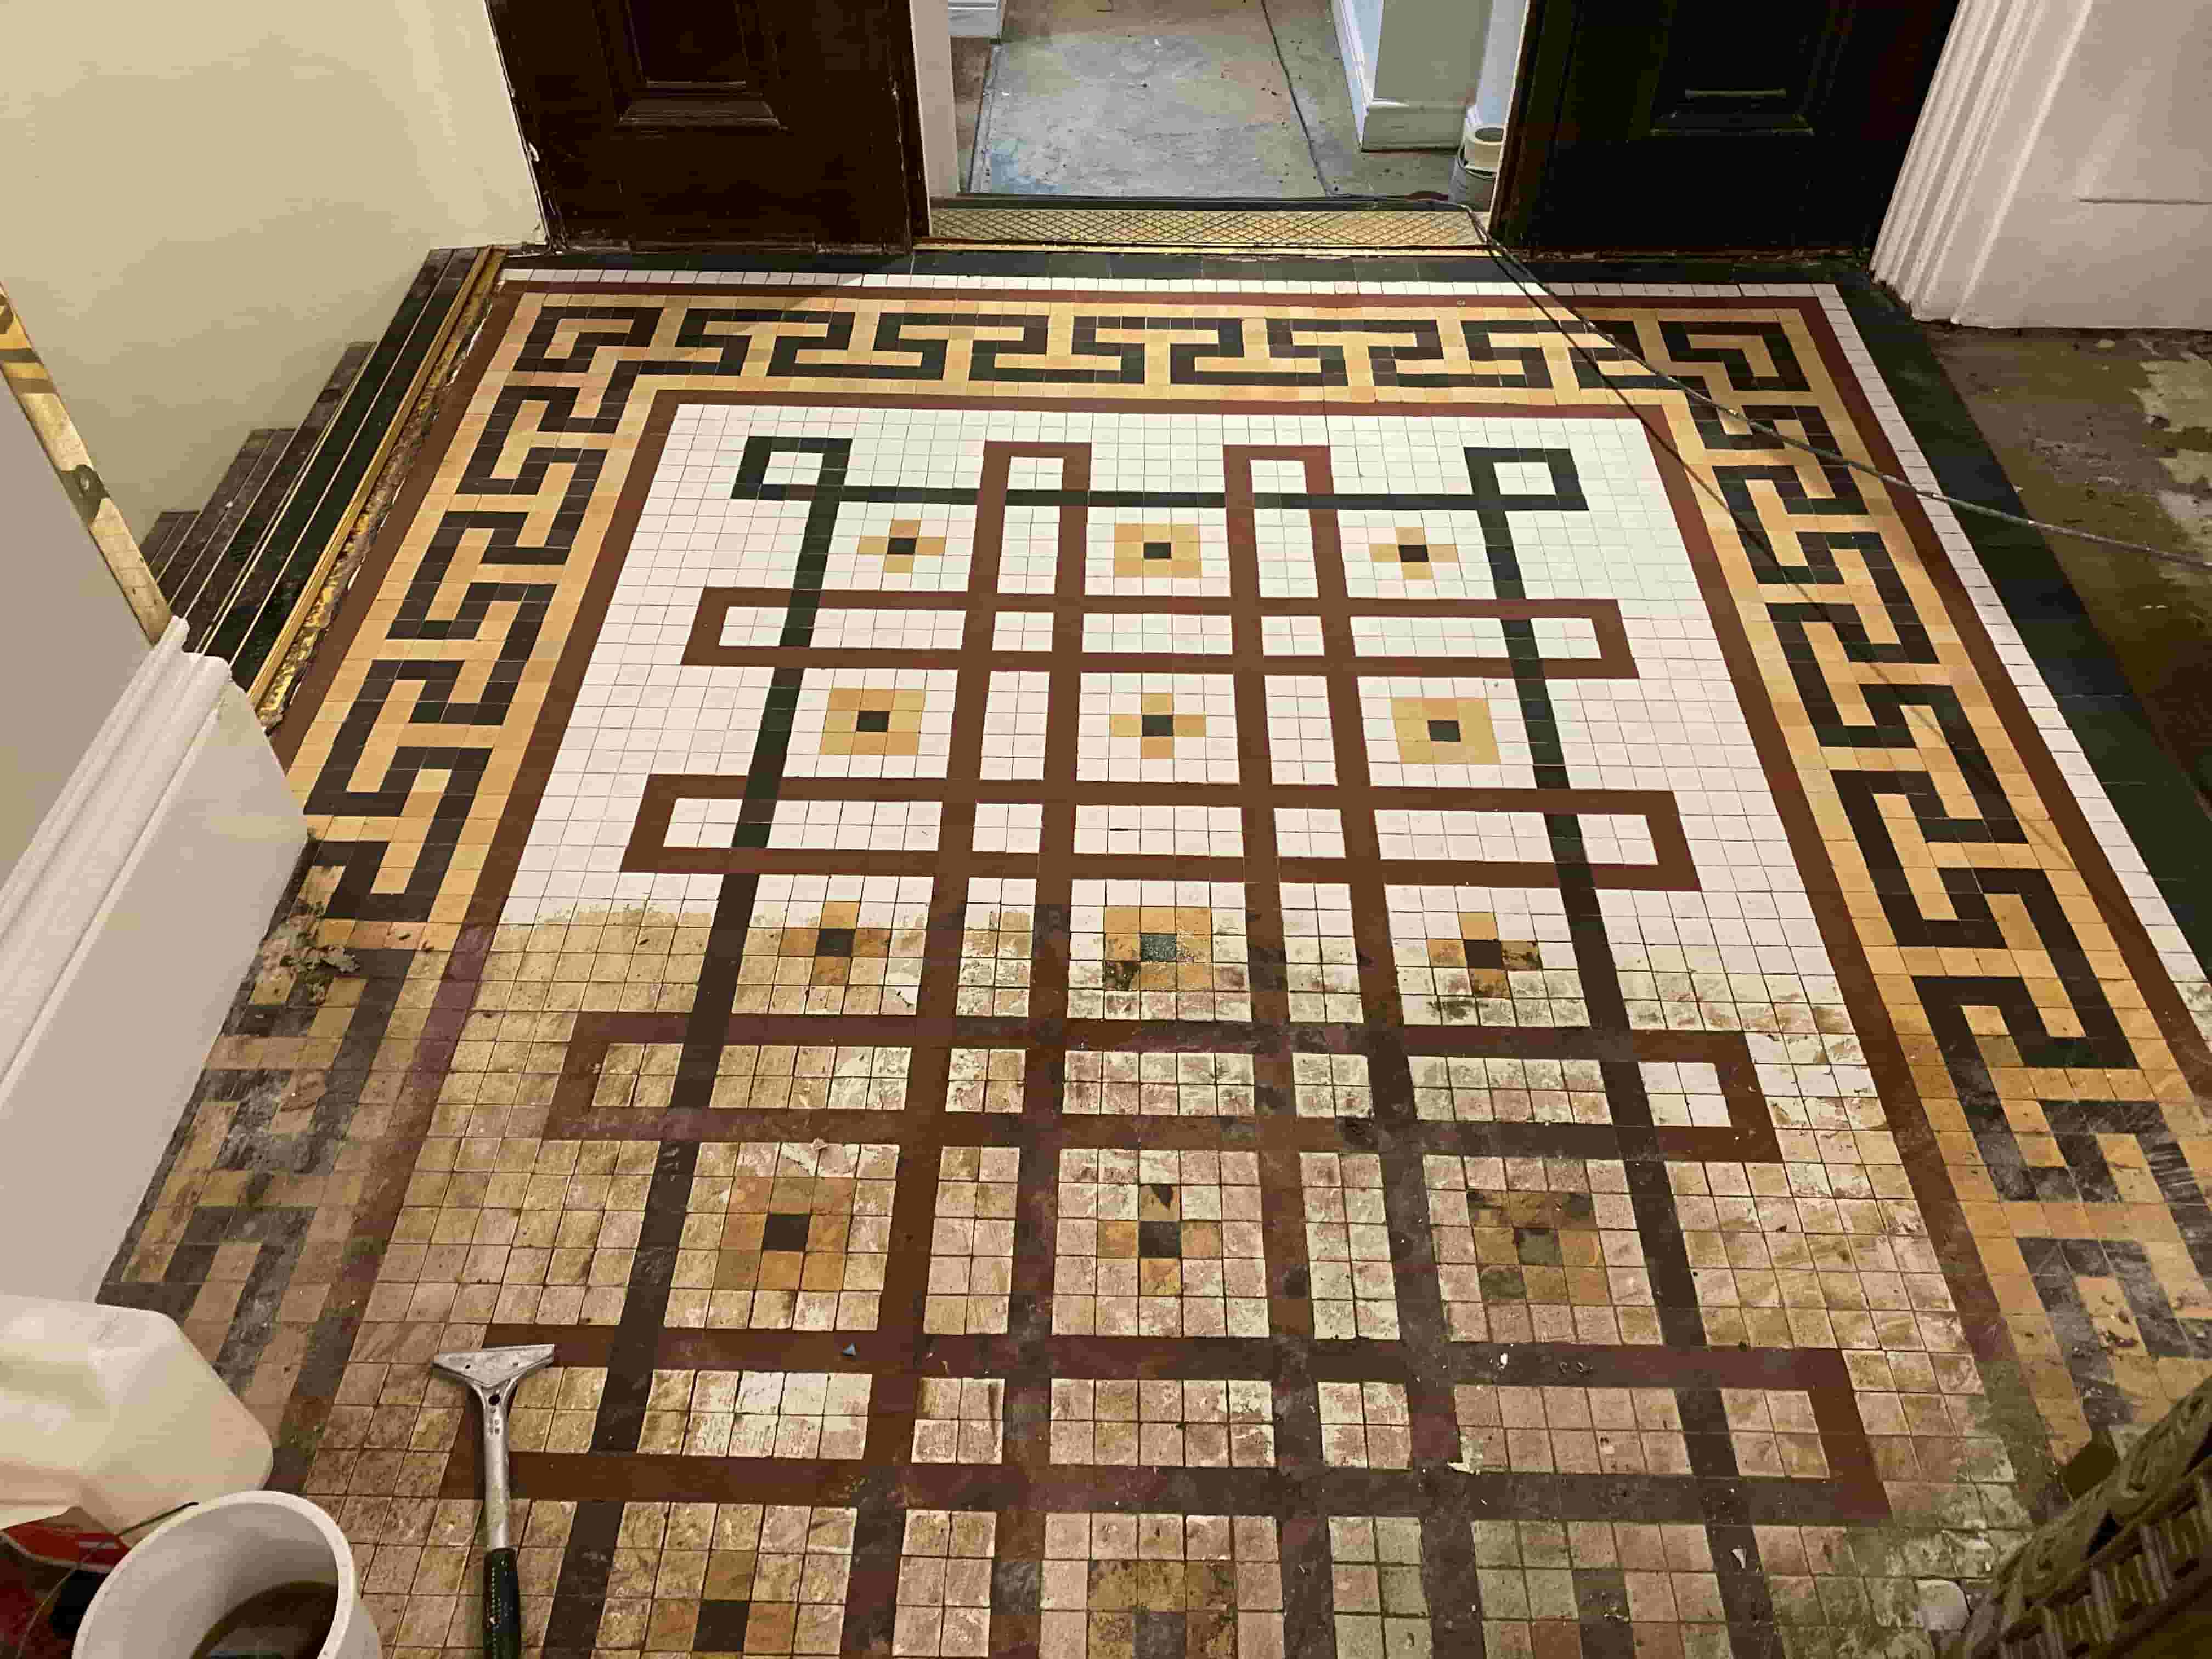 Hotel Tesserae Stone Mosaic Tiled Floor During Renovation Taplow